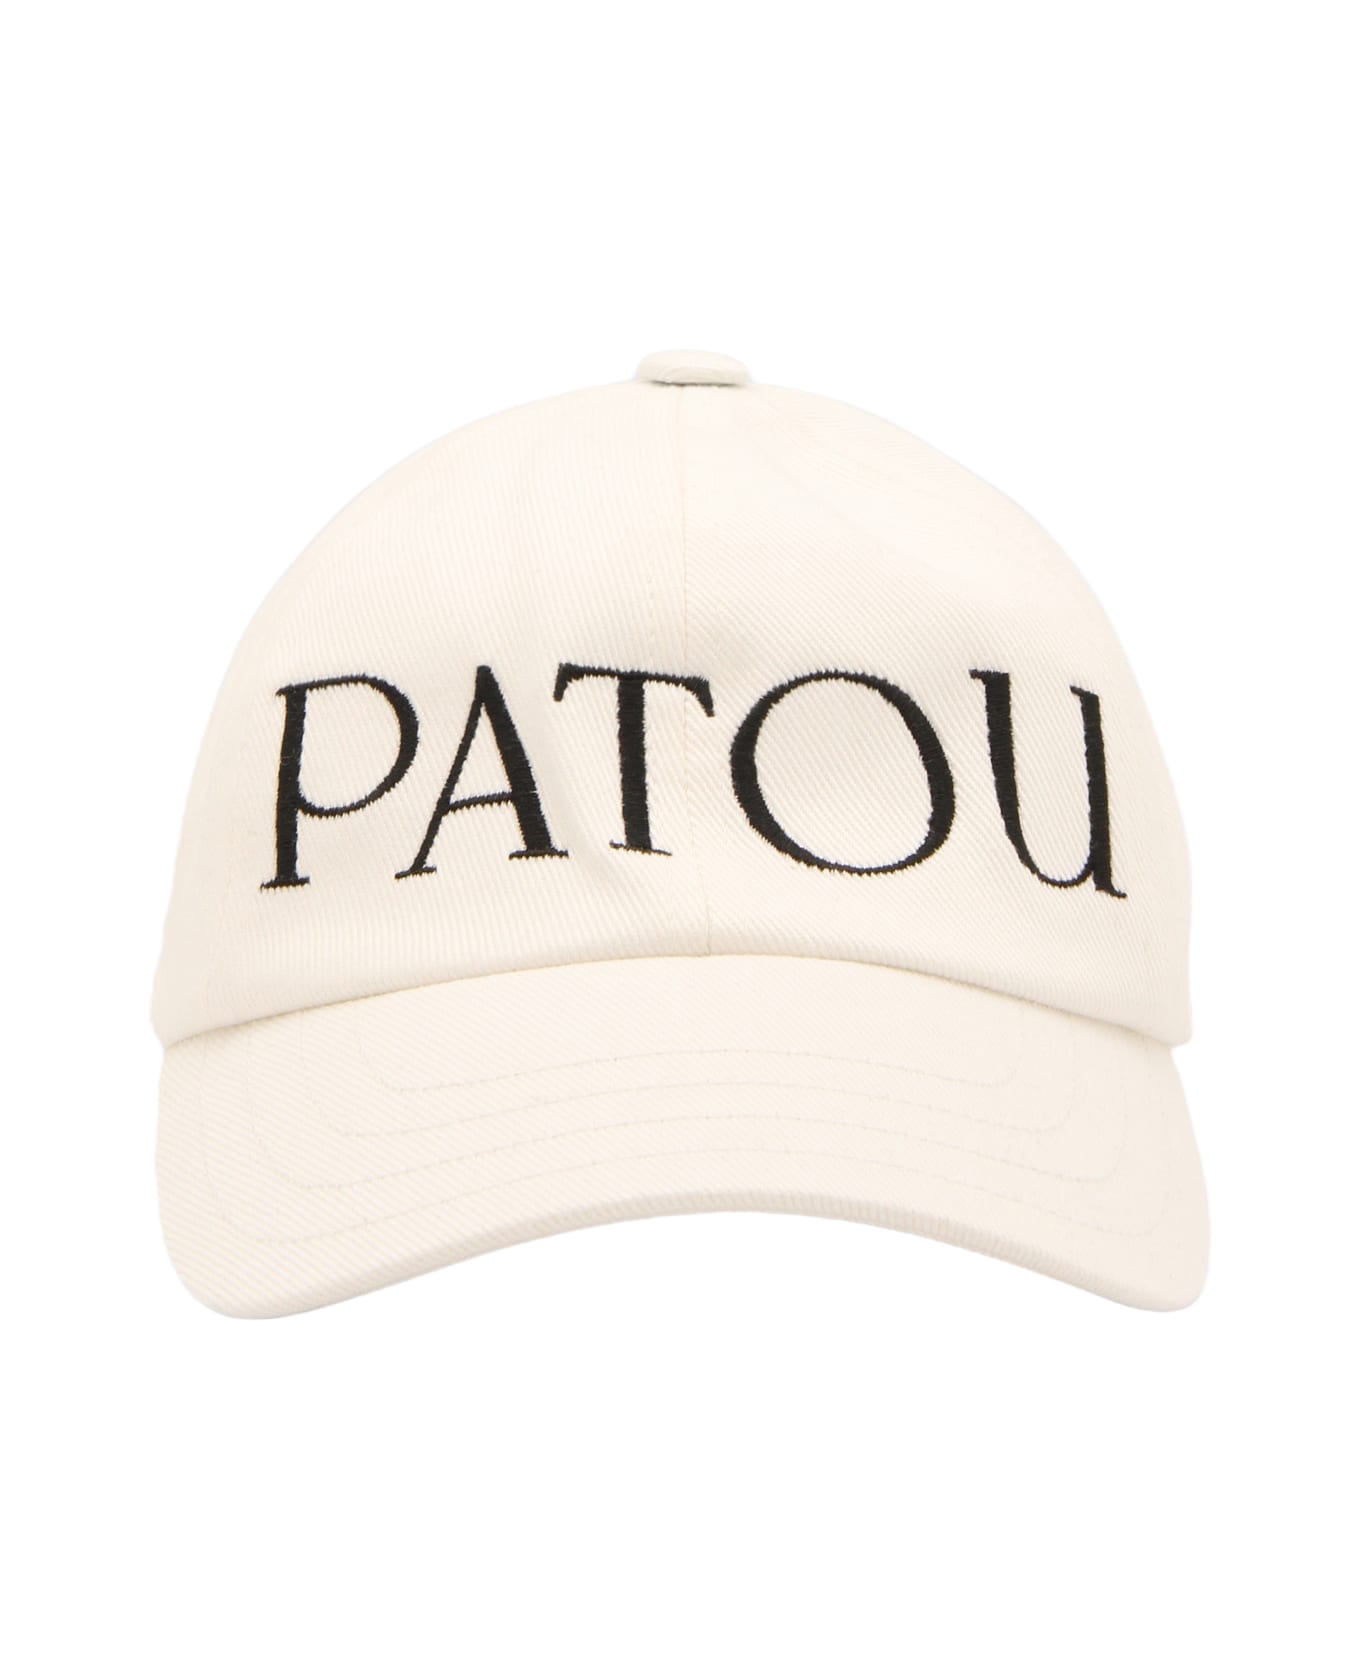 Patou White And Black Cotton Baseball Cap - Beige